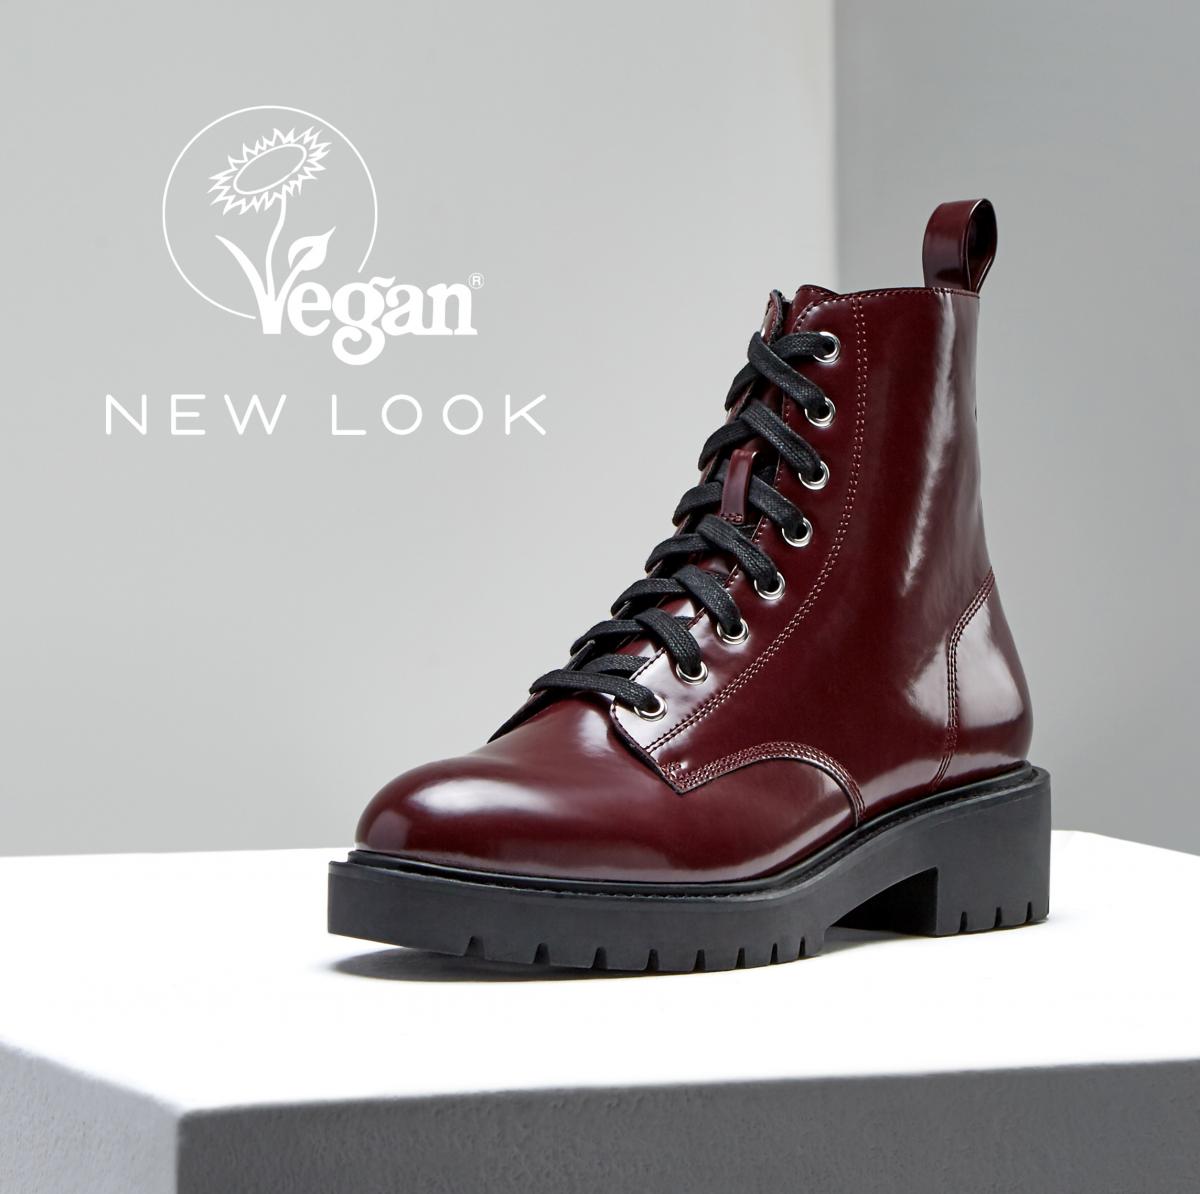 Dark red winter vegan boot against a grey background